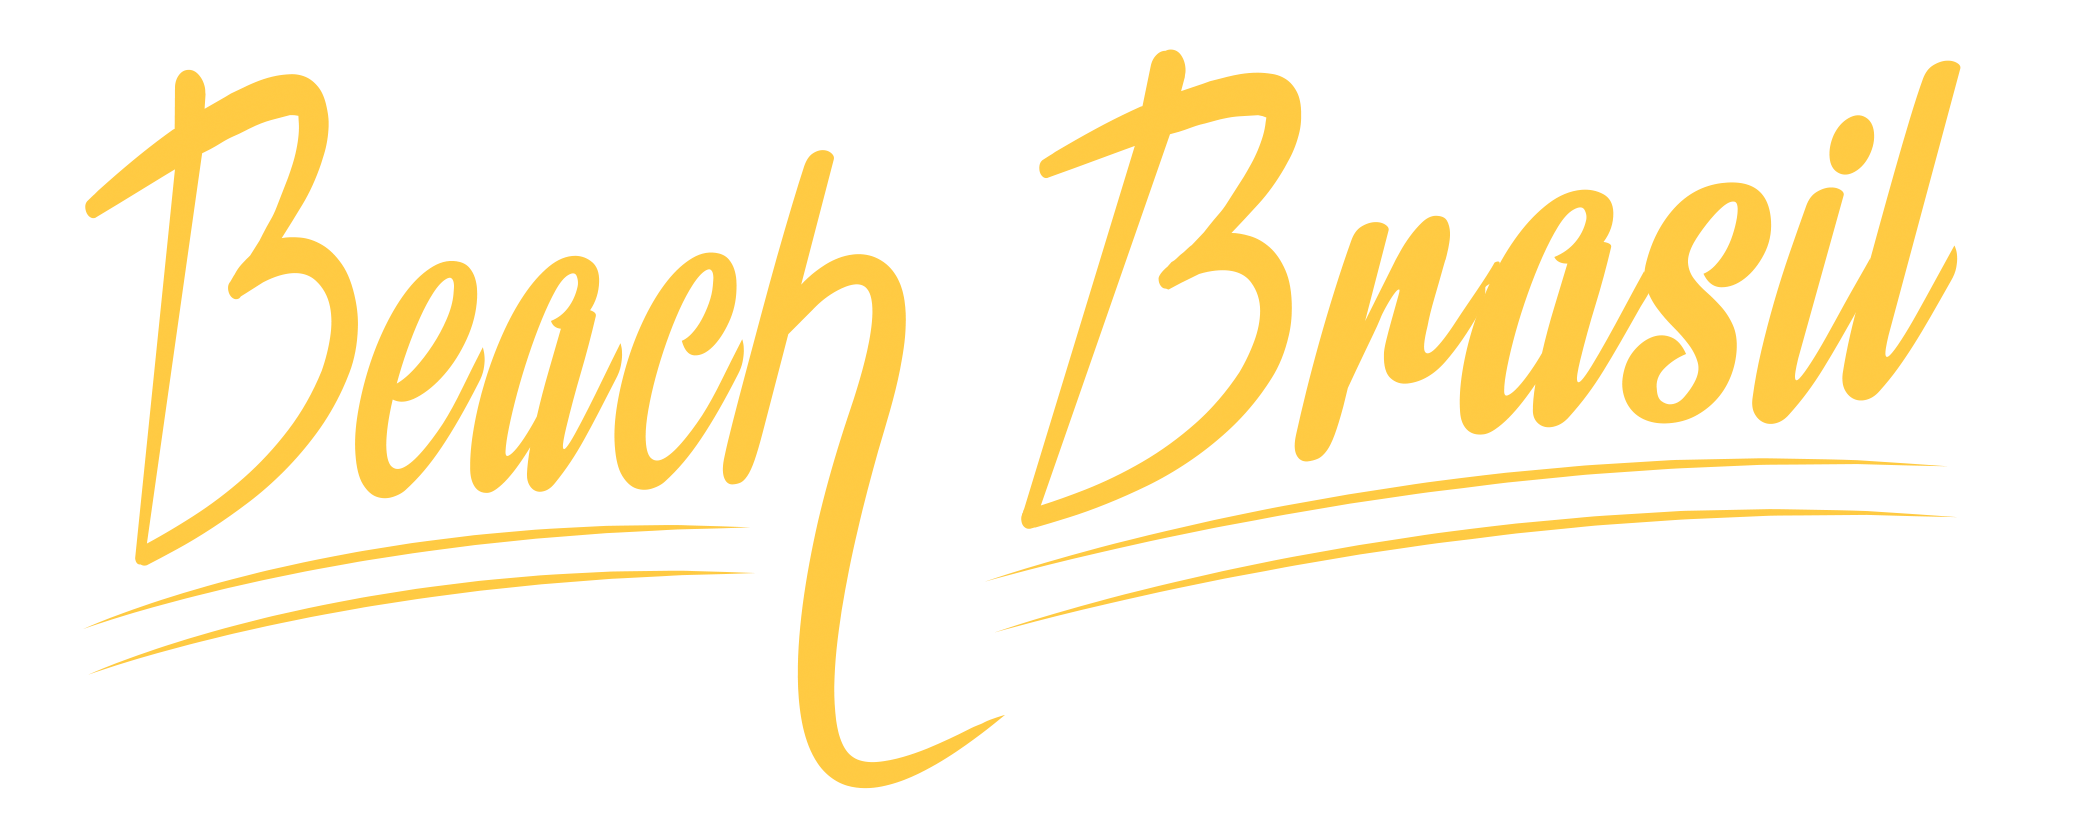 BEACH BRASIL